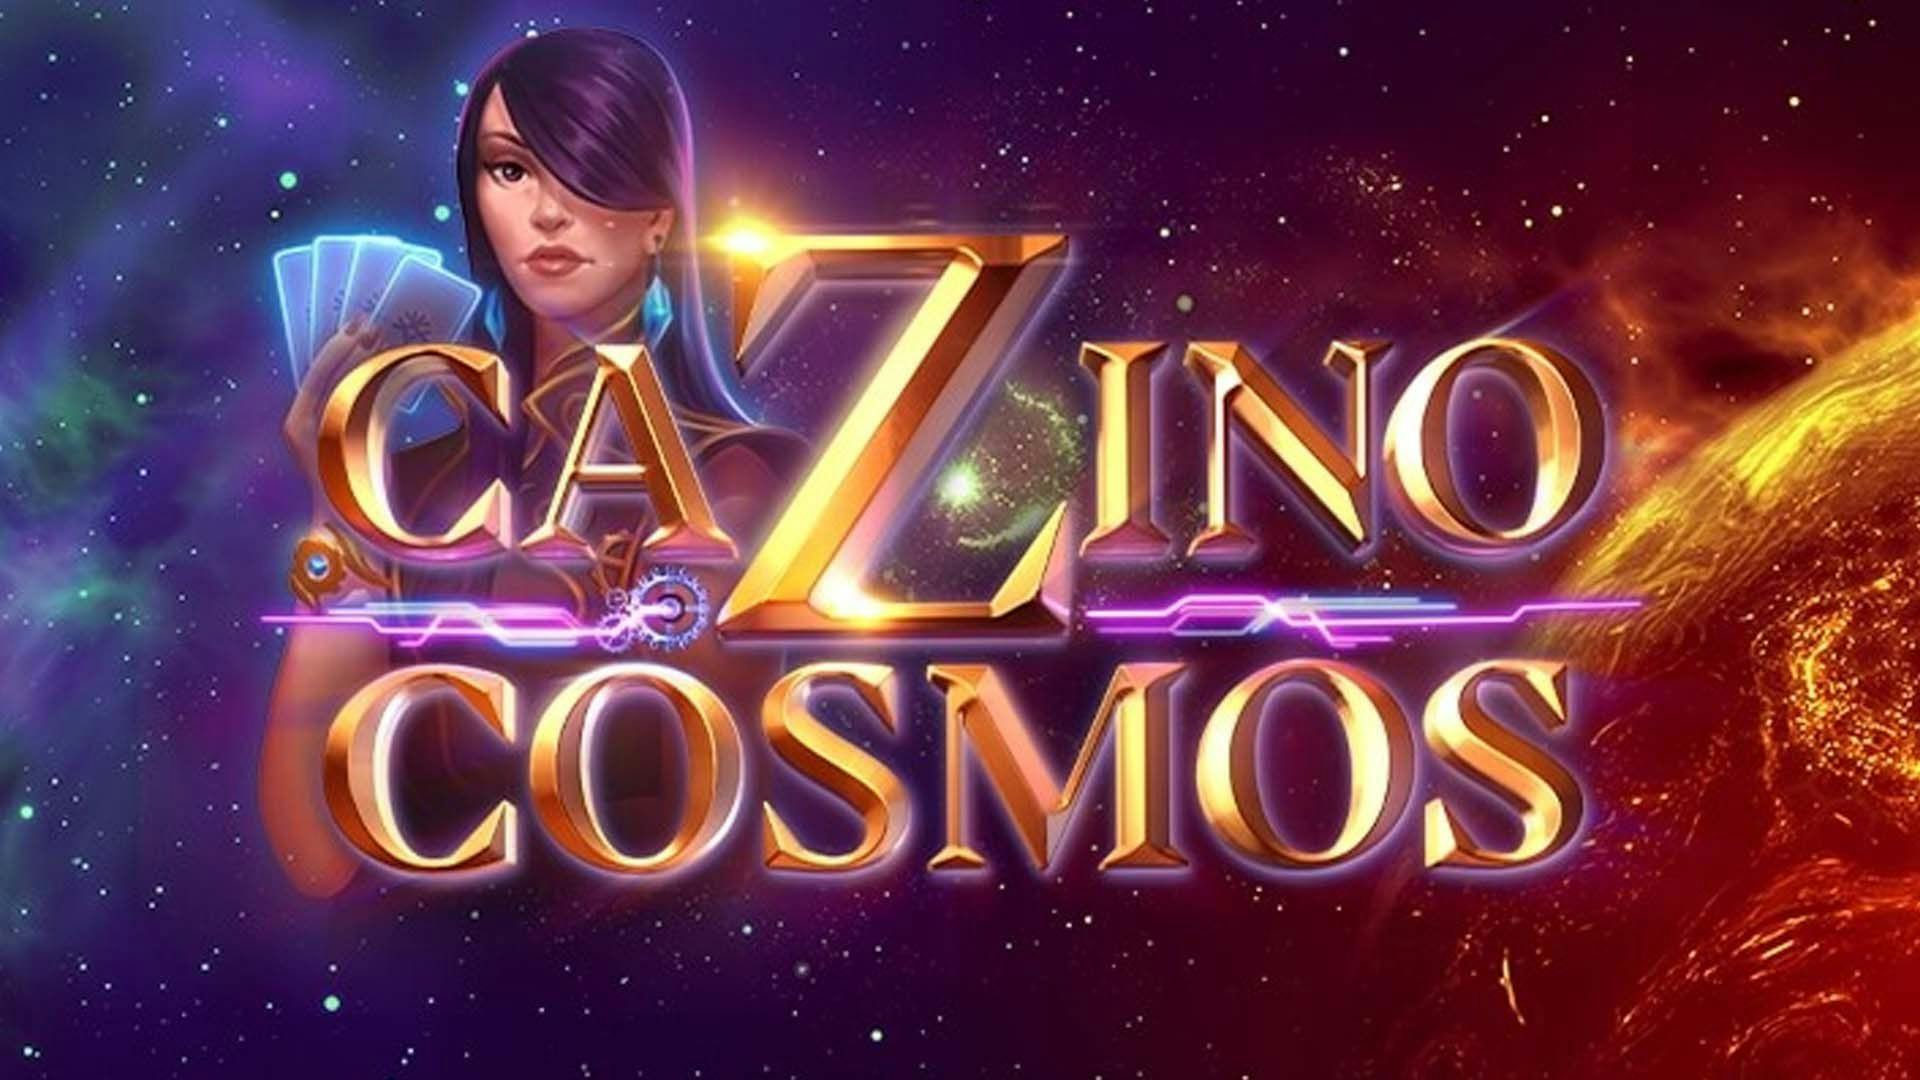 Cazino Cosmos Slot Machine Online Free Play